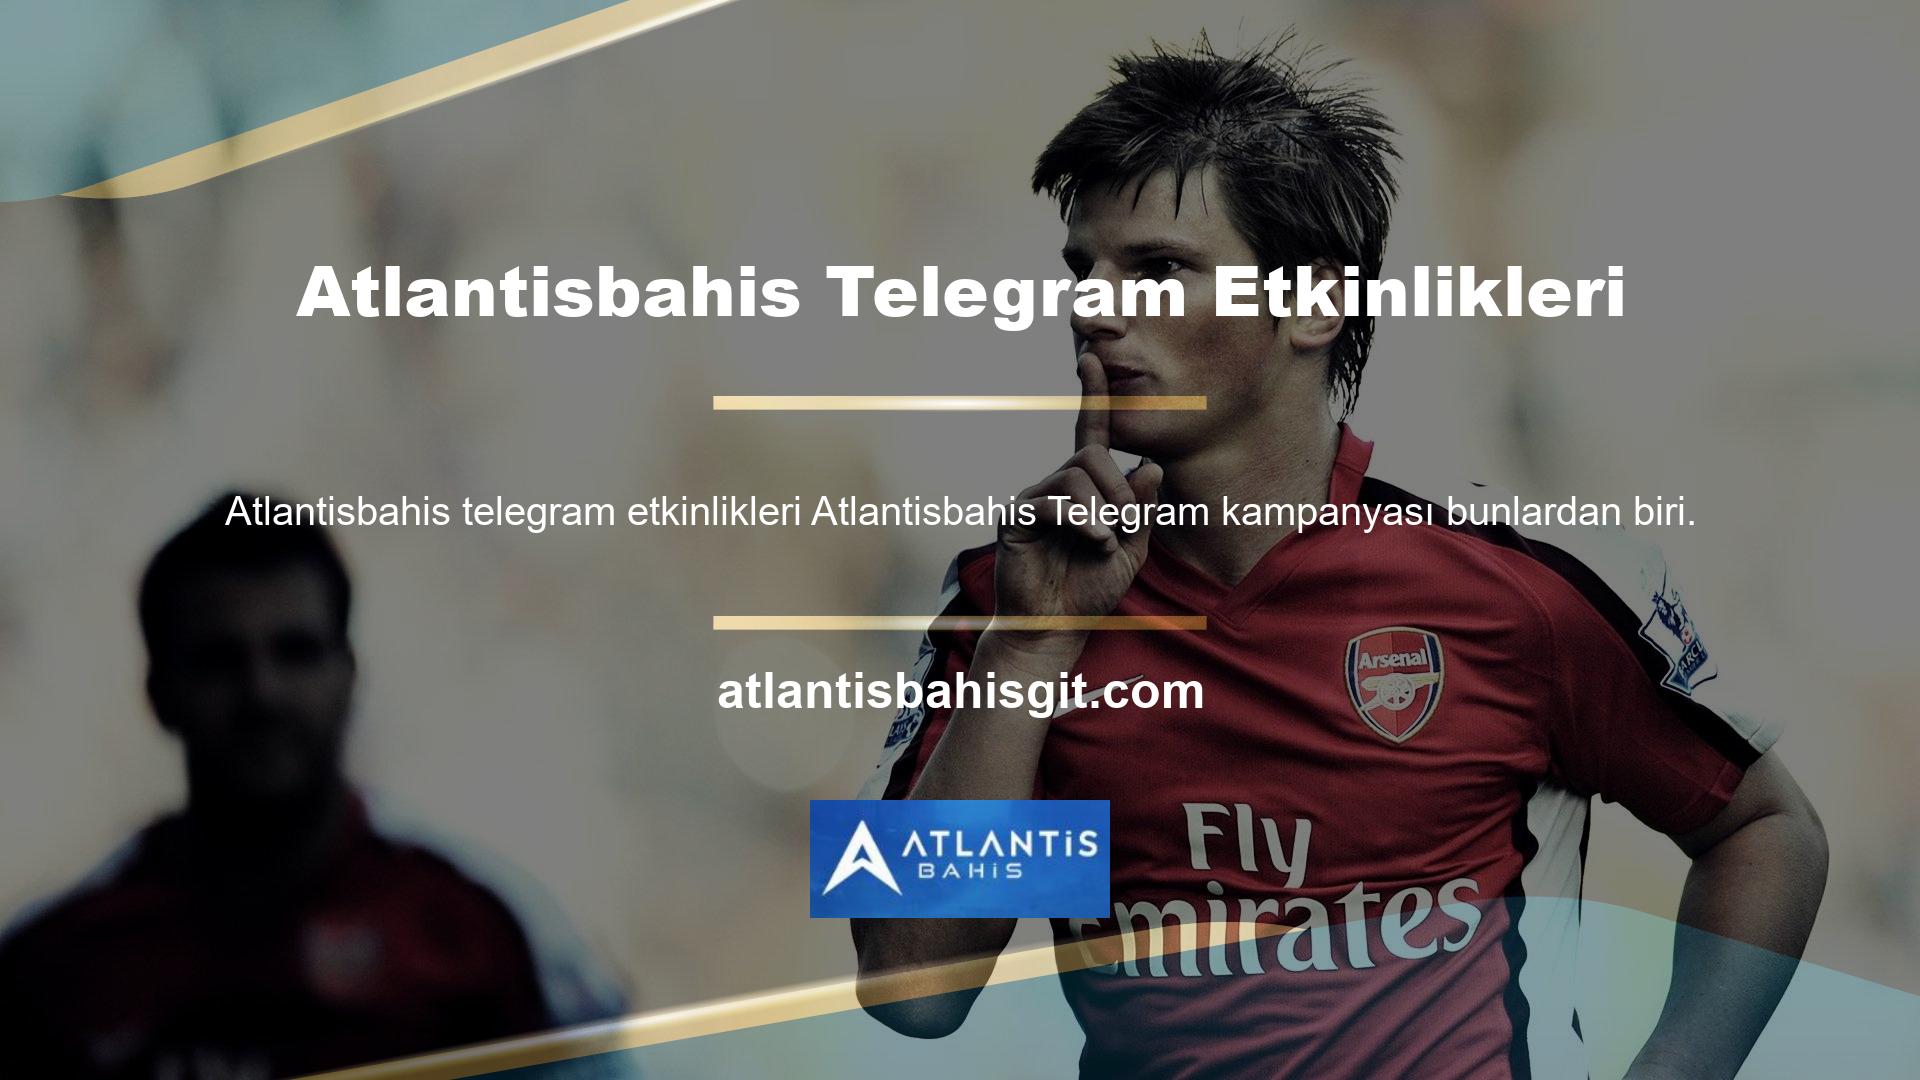 Atlantisbahis telegram etkinlikleri